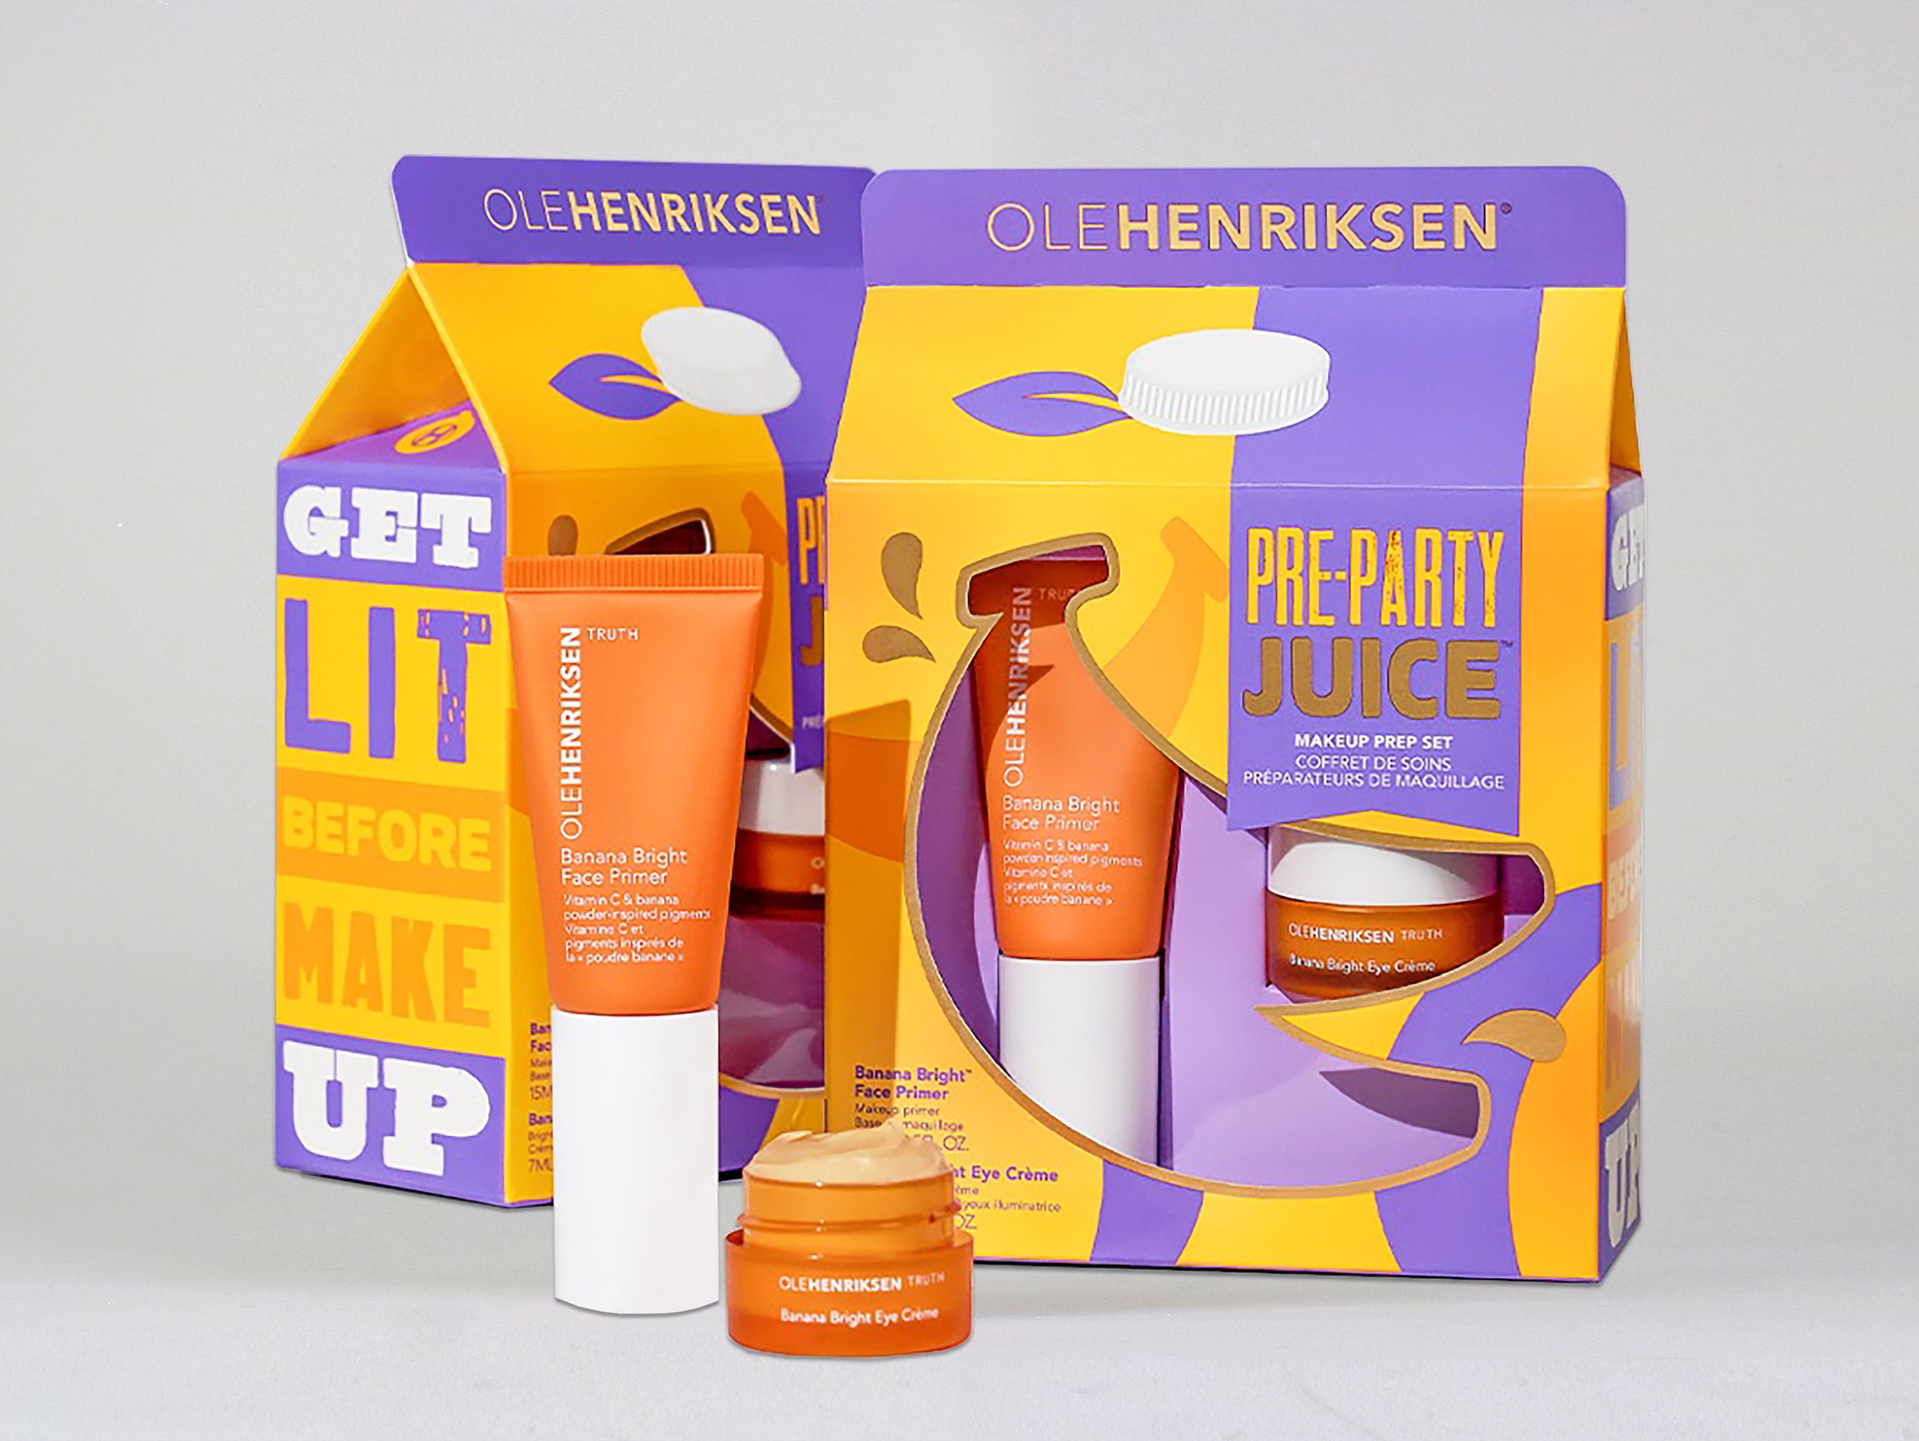 Ole Henriksen Pre-Party Juice Makeup Prep Set folding cartons